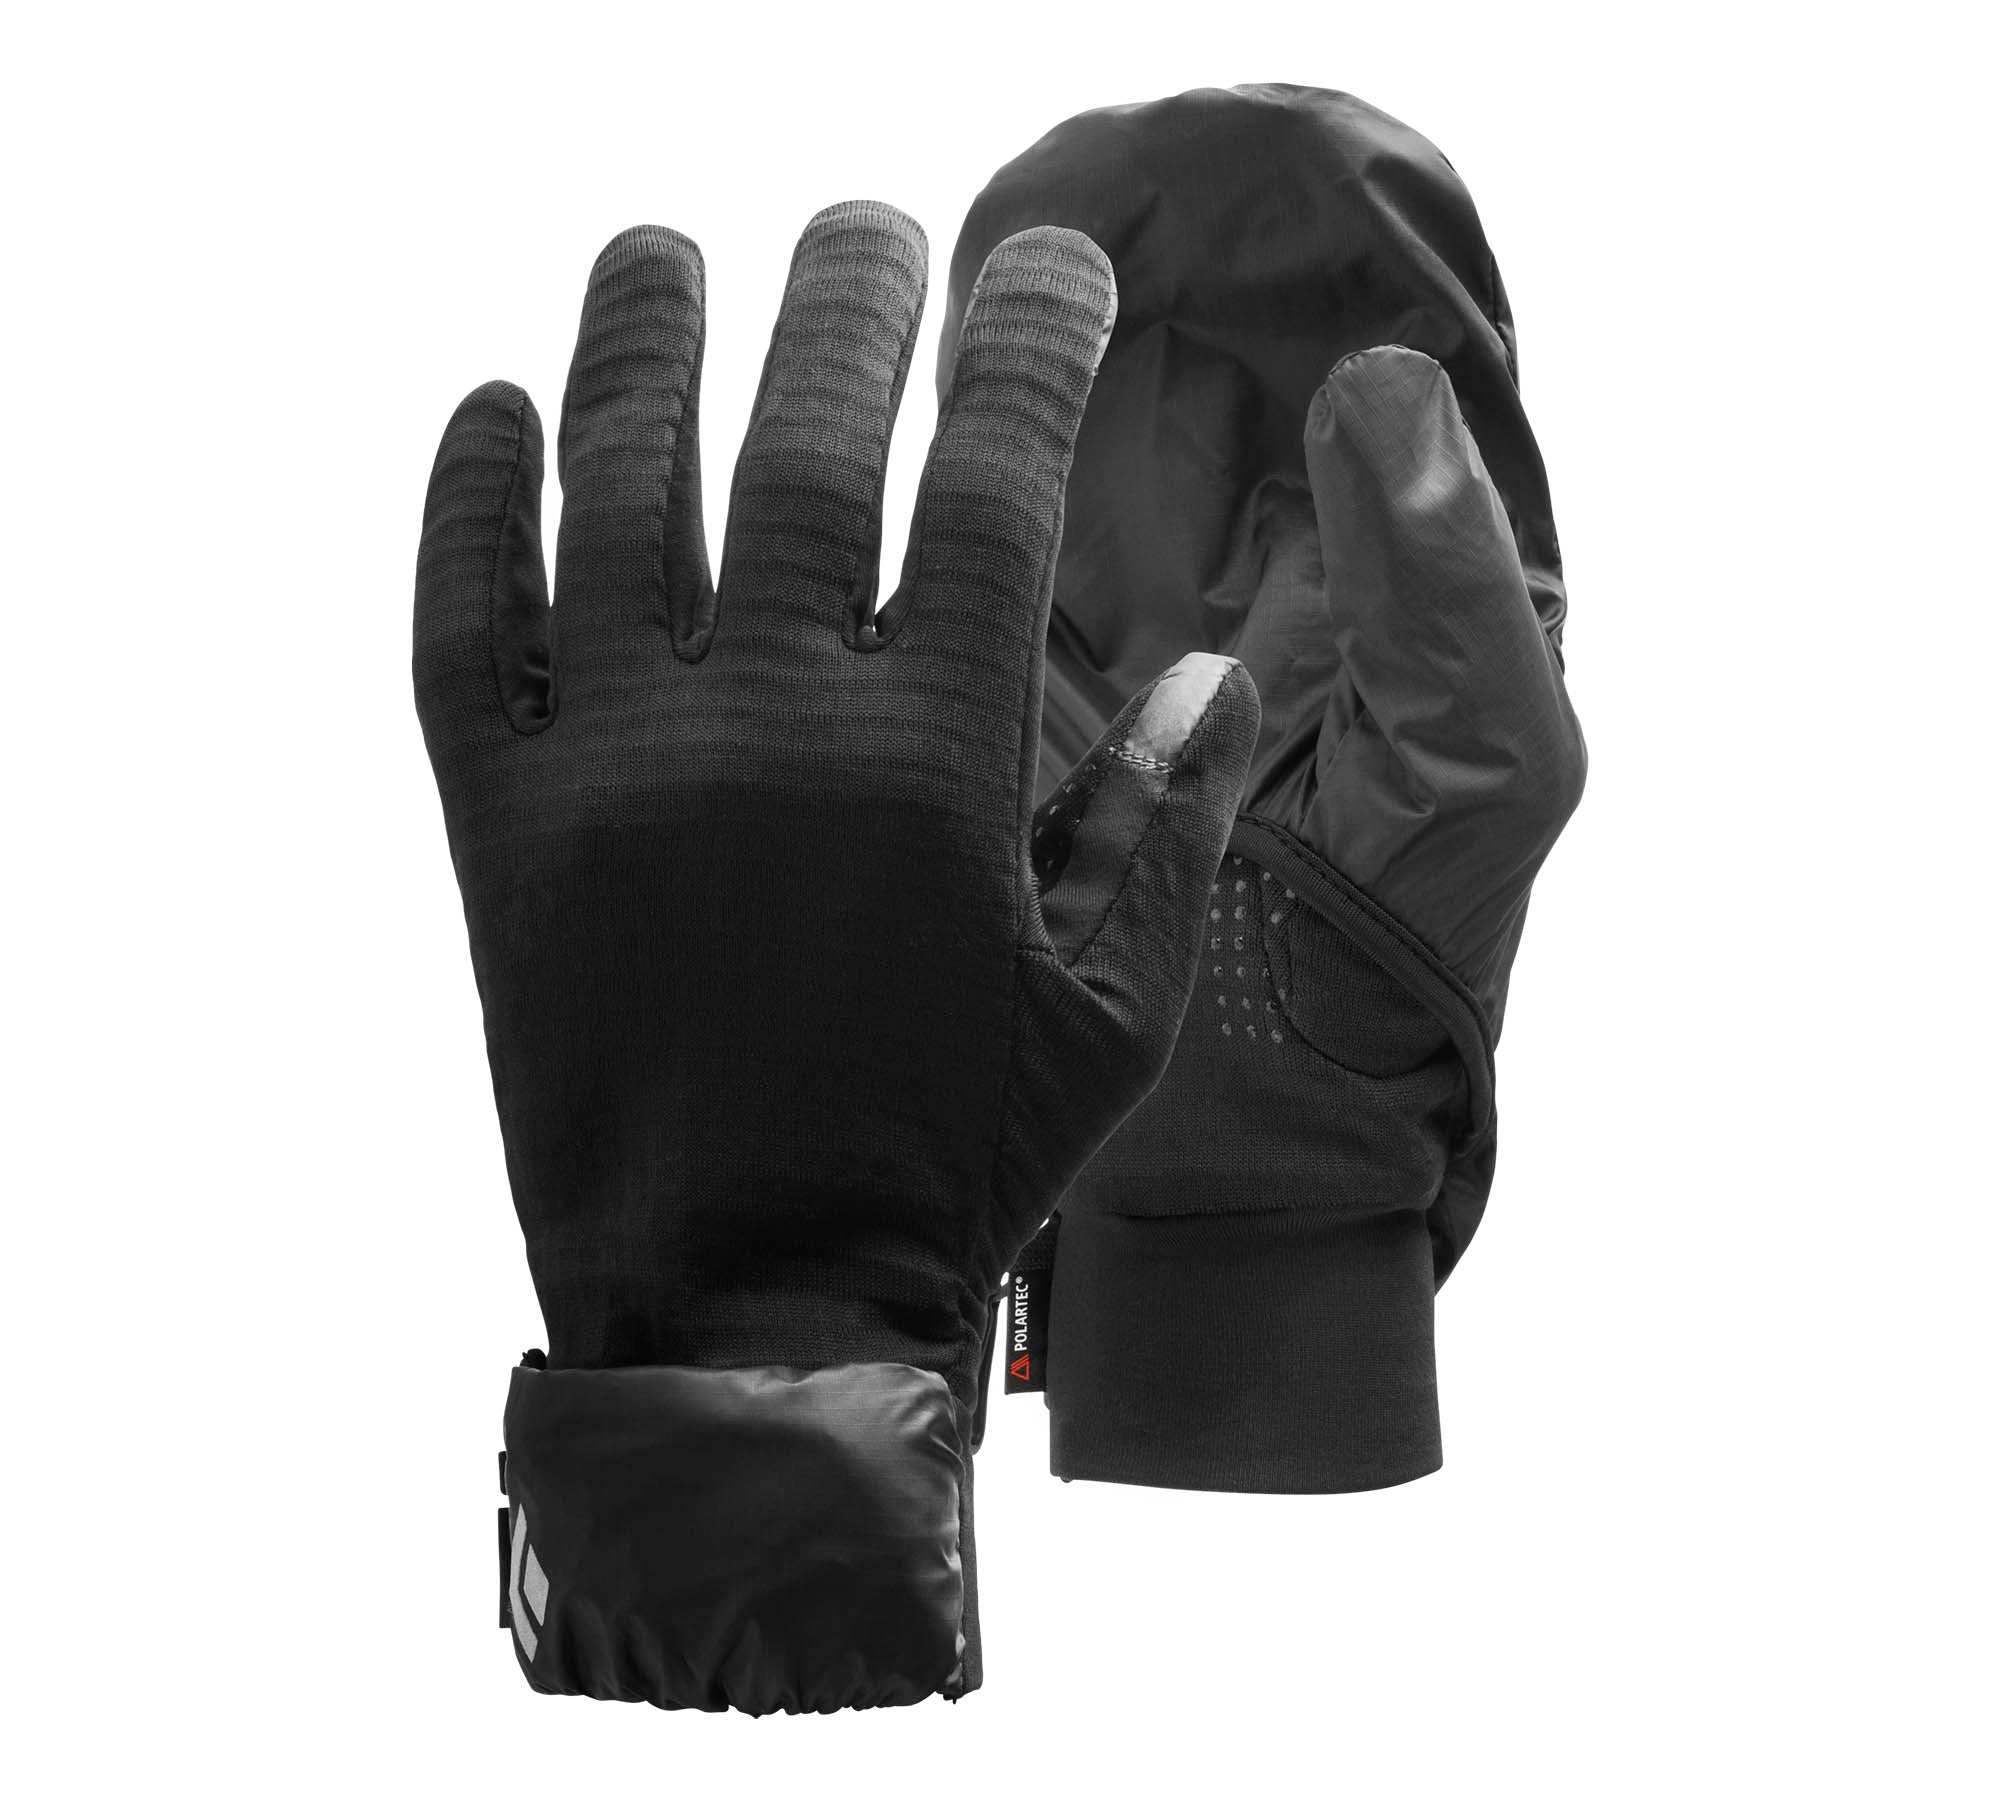 gridtech glove